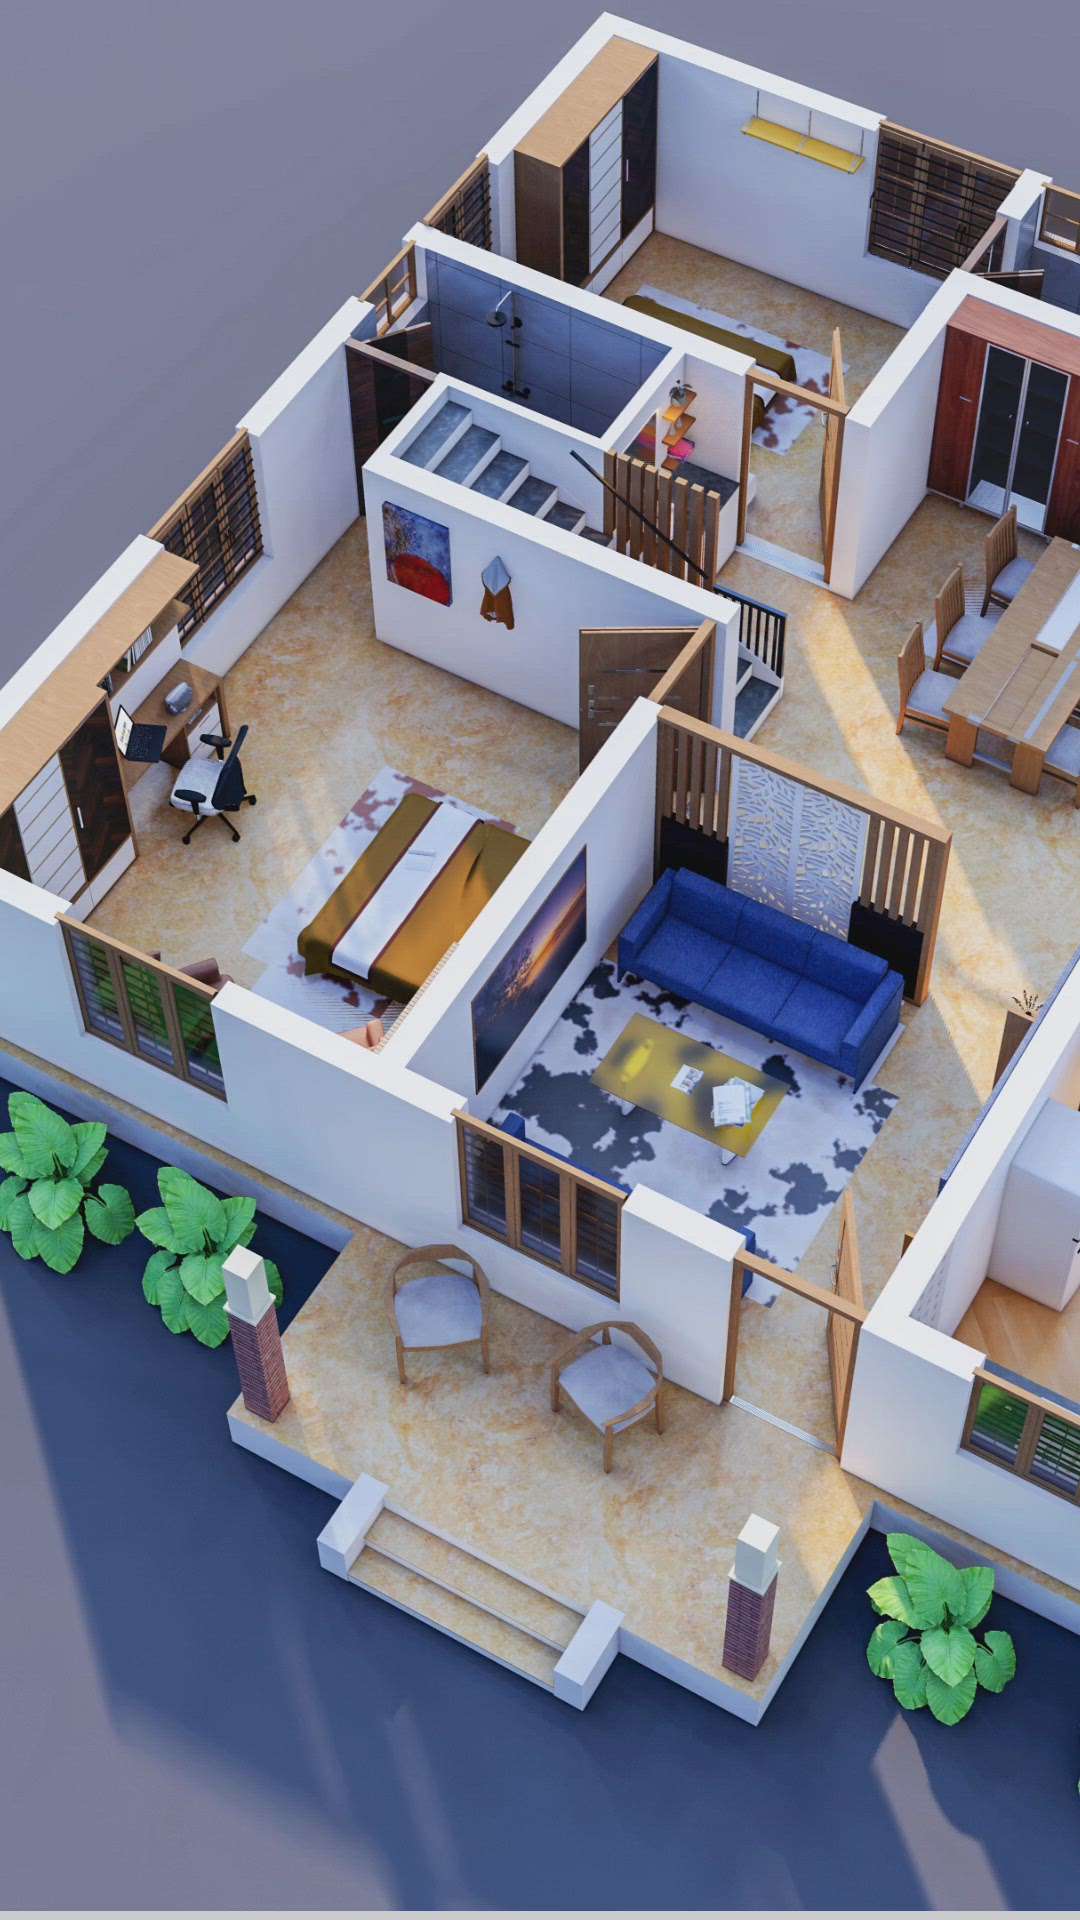 7 centil 1450 sqft/ 2bhk/ house 3d floor plan / courtyard / designed by anju kadju  #2bhkplan #7centPlot #1500sqftHouse